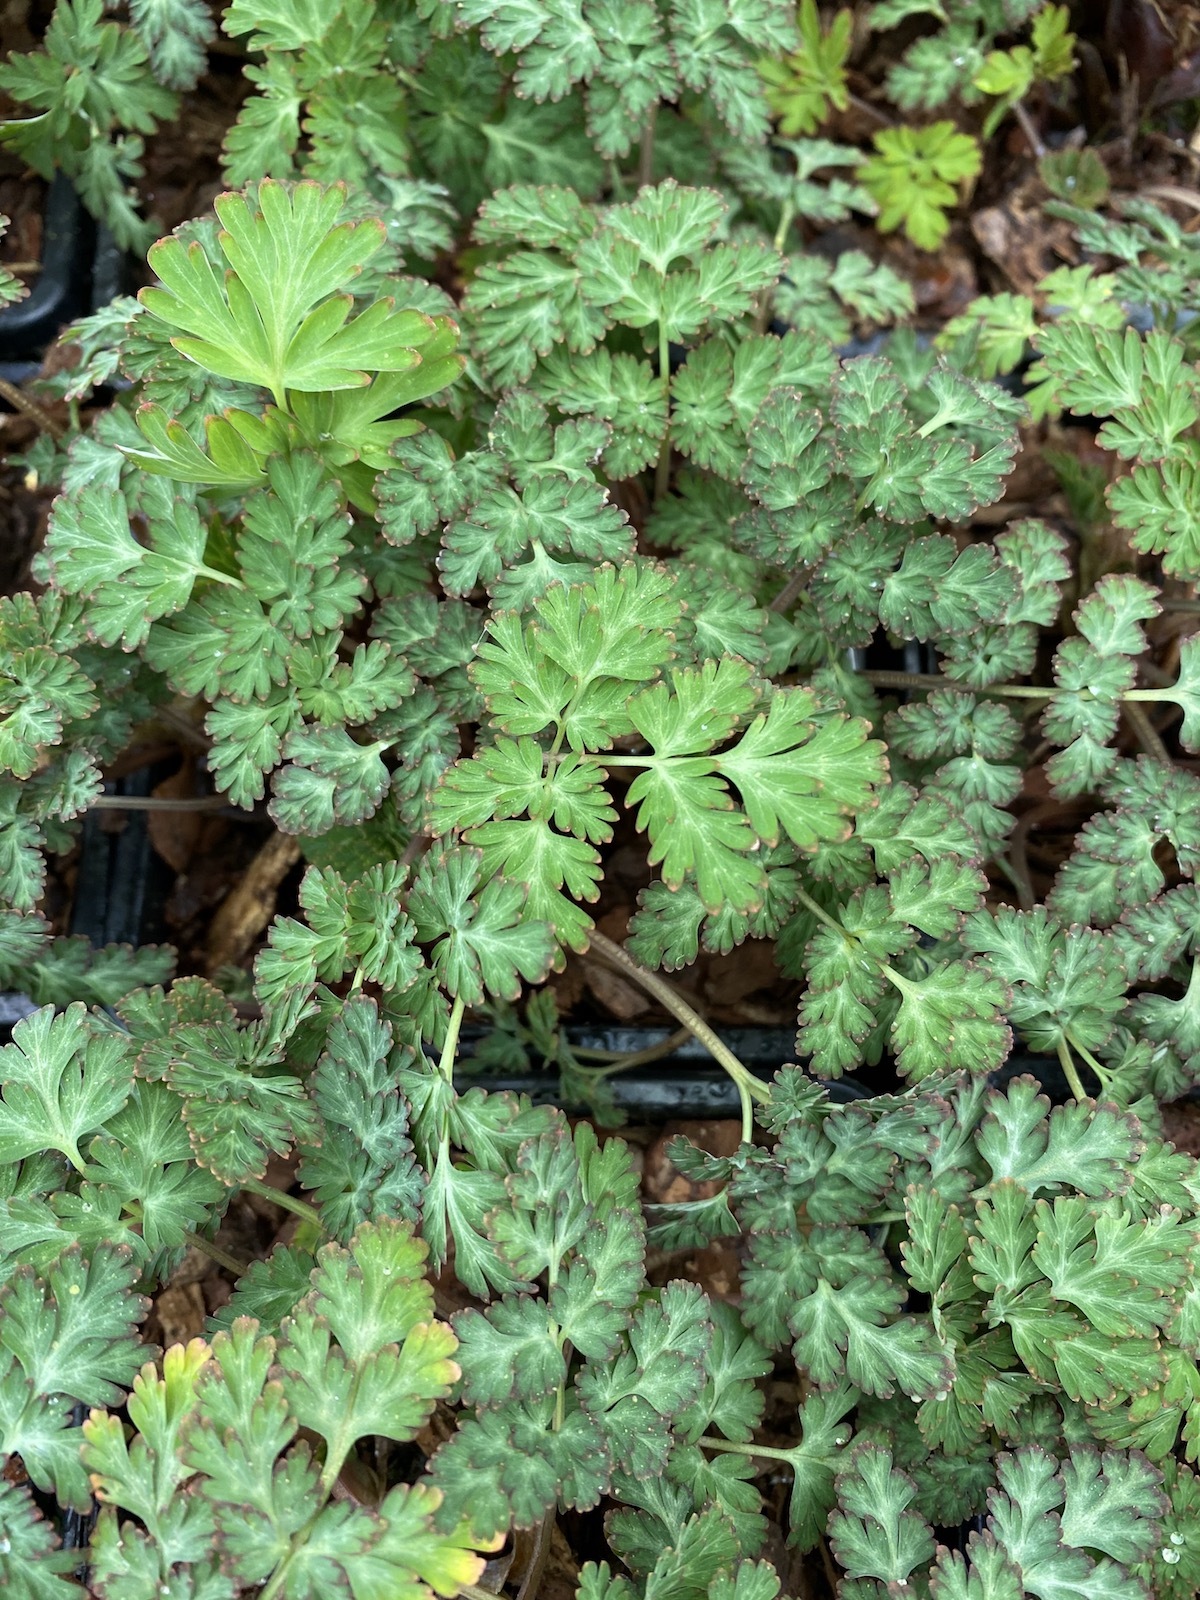 Corydalis anthriscifolia - The Beth Chatto Gardens